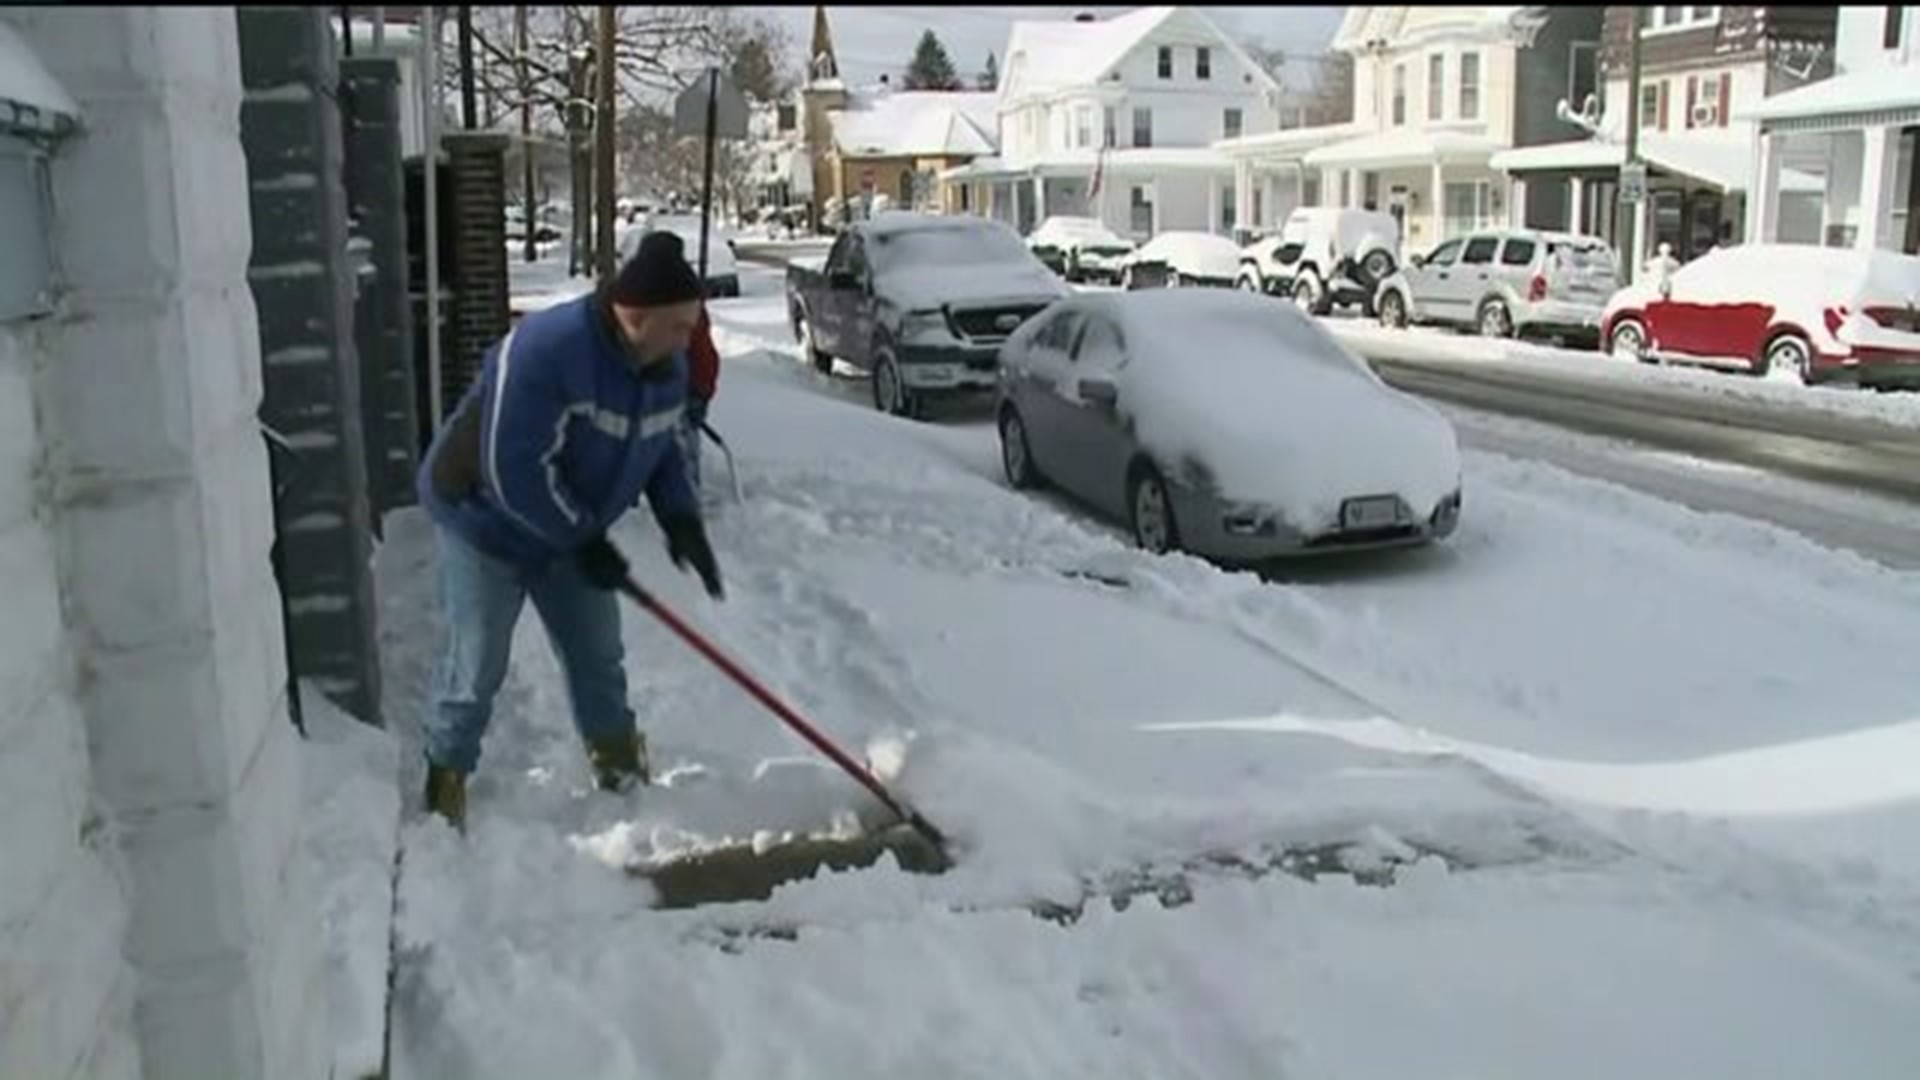 Be Careful While Shoveling Snow